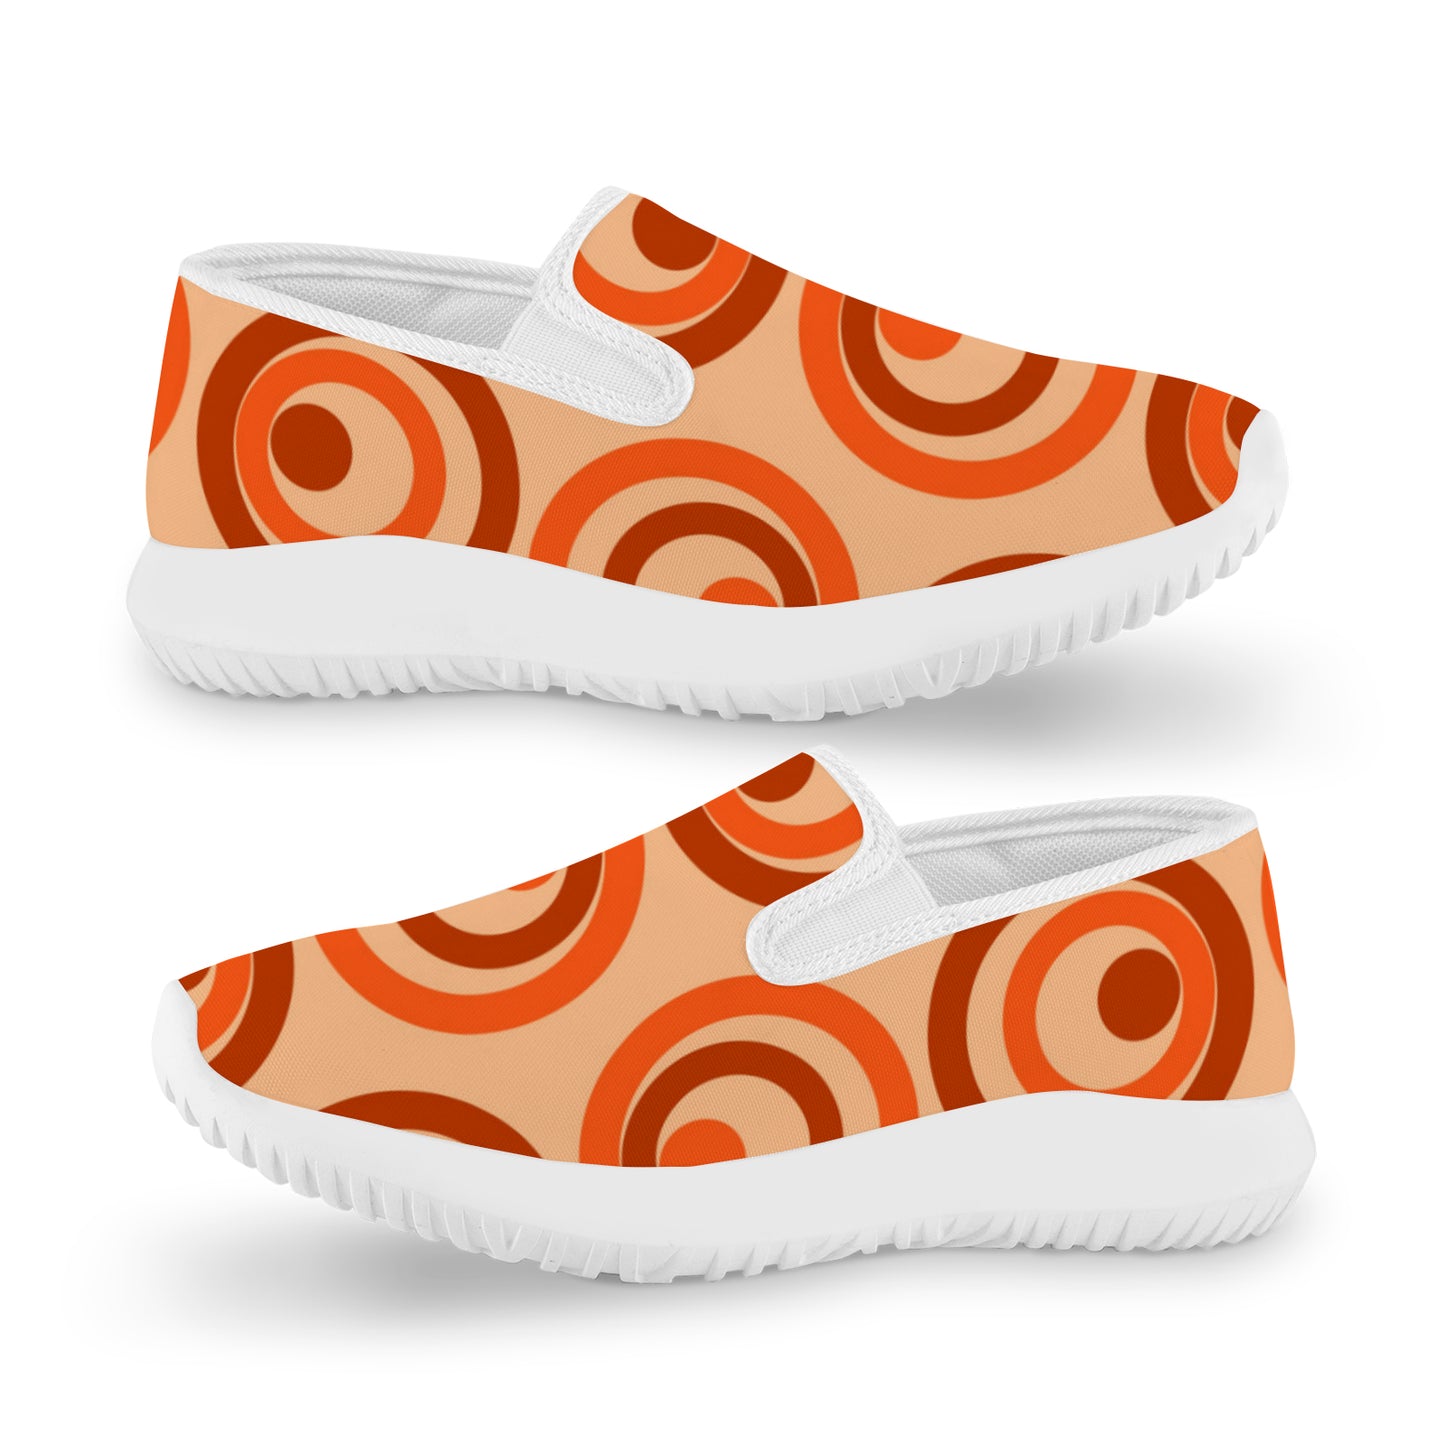 Women's Slip-on Sneakers - Orange Circles